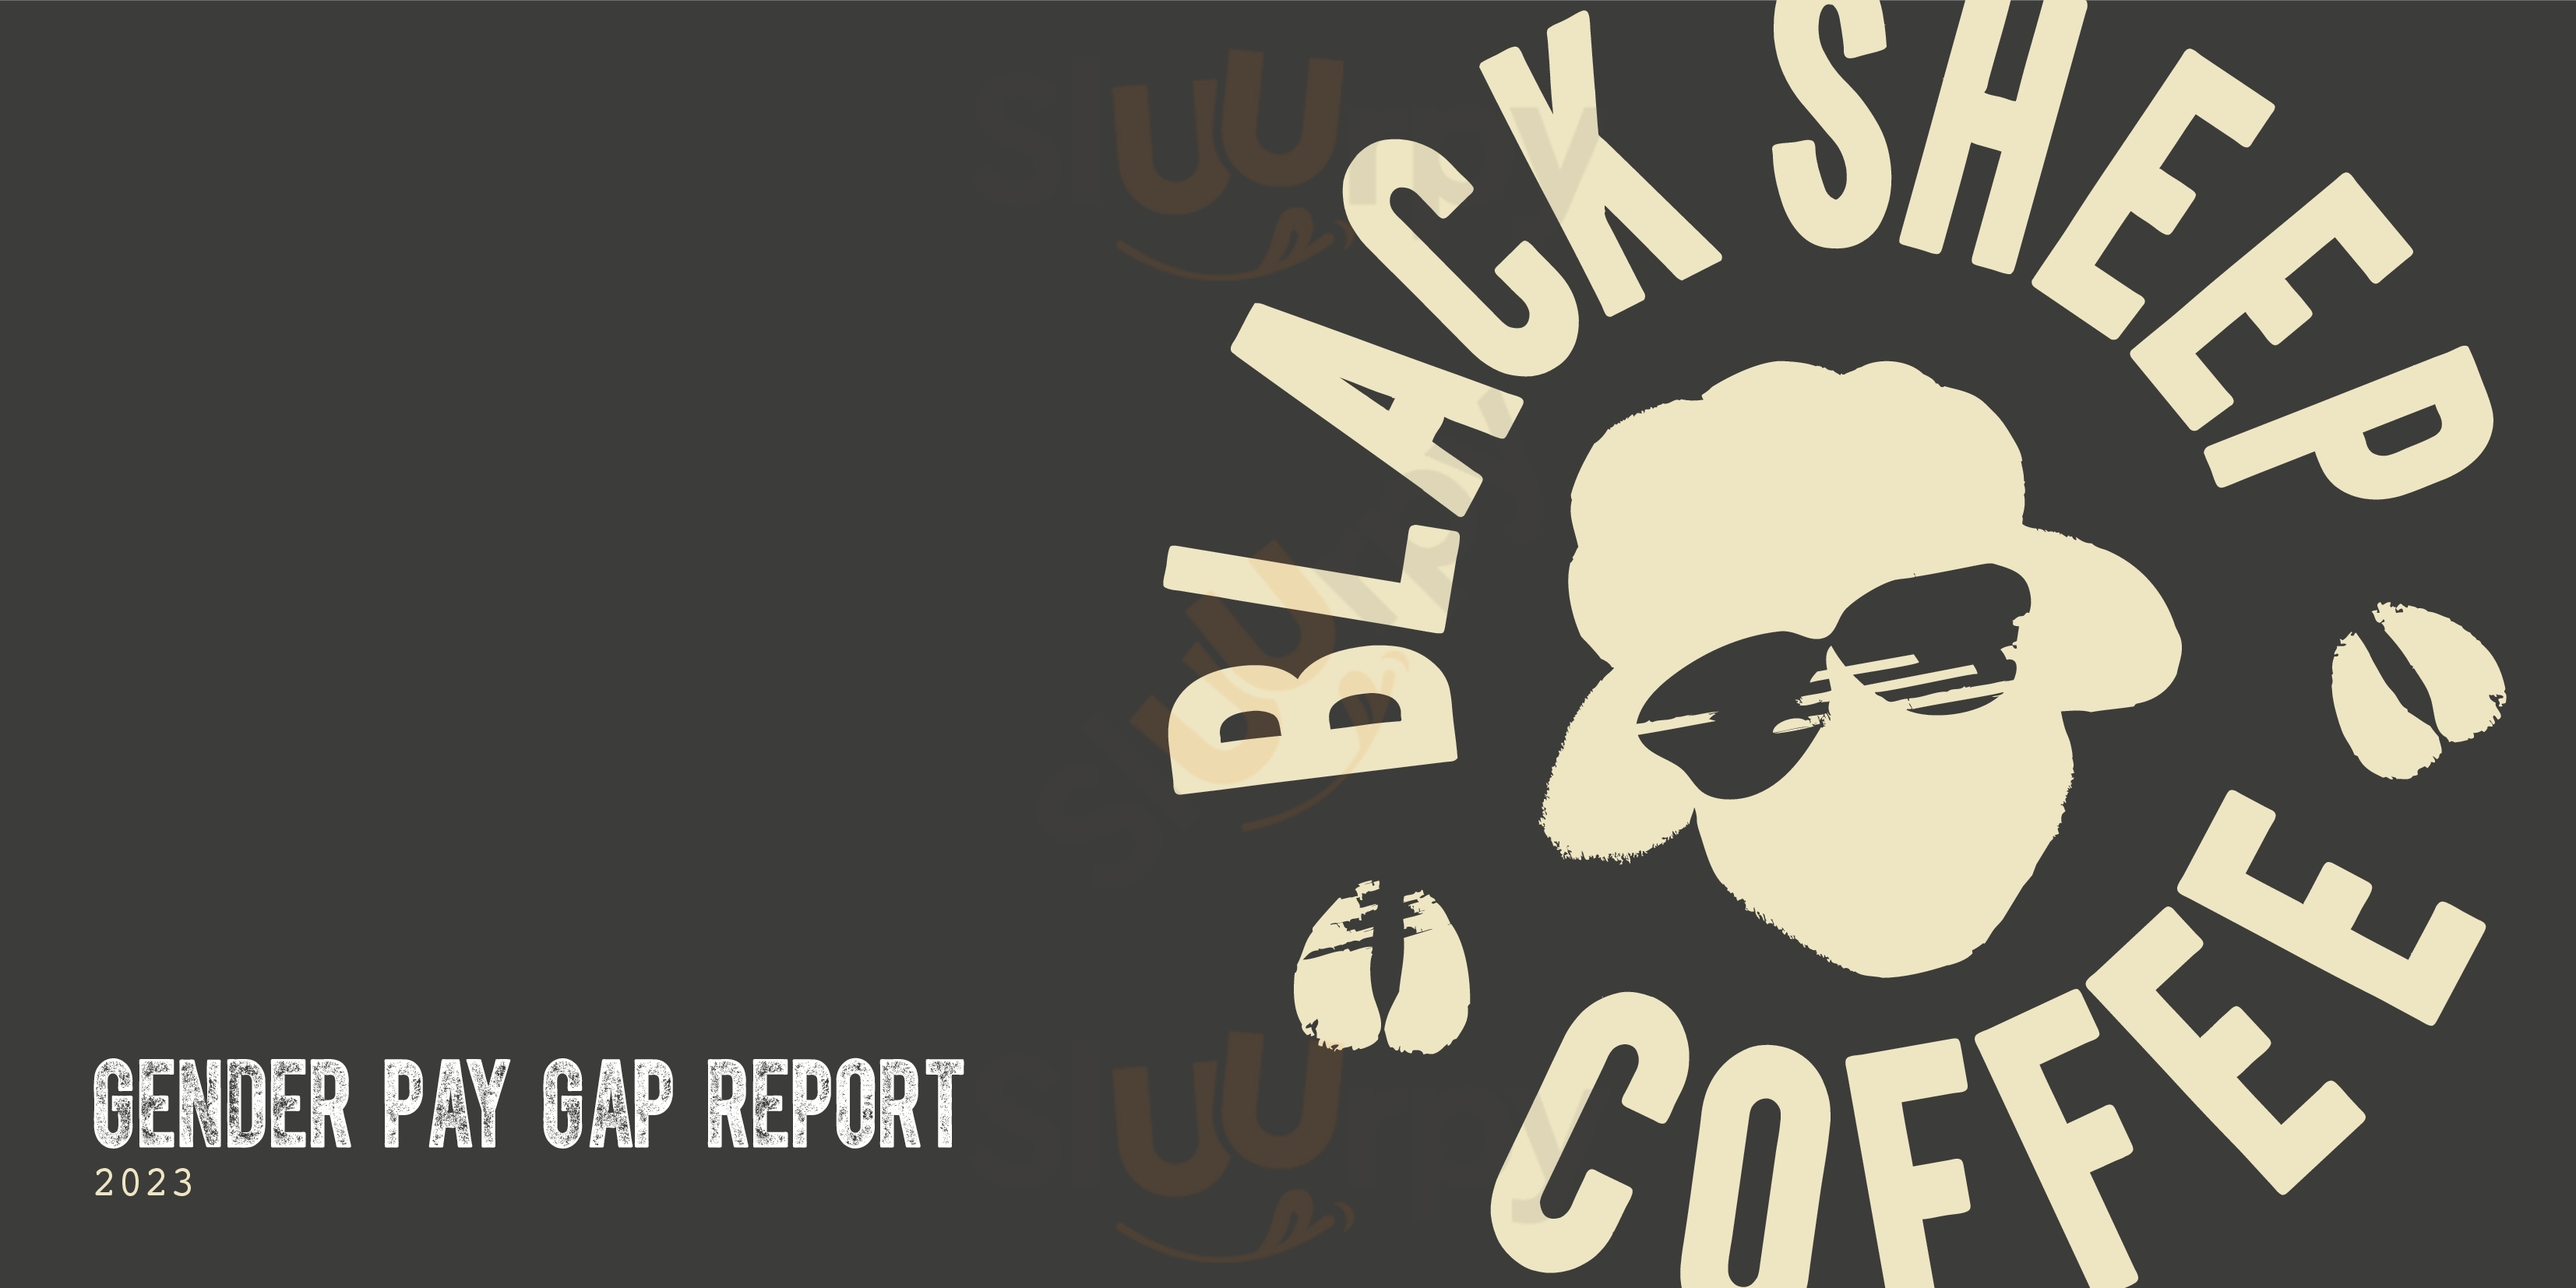 Black Sheep Coffee Birmingham Menu - 1